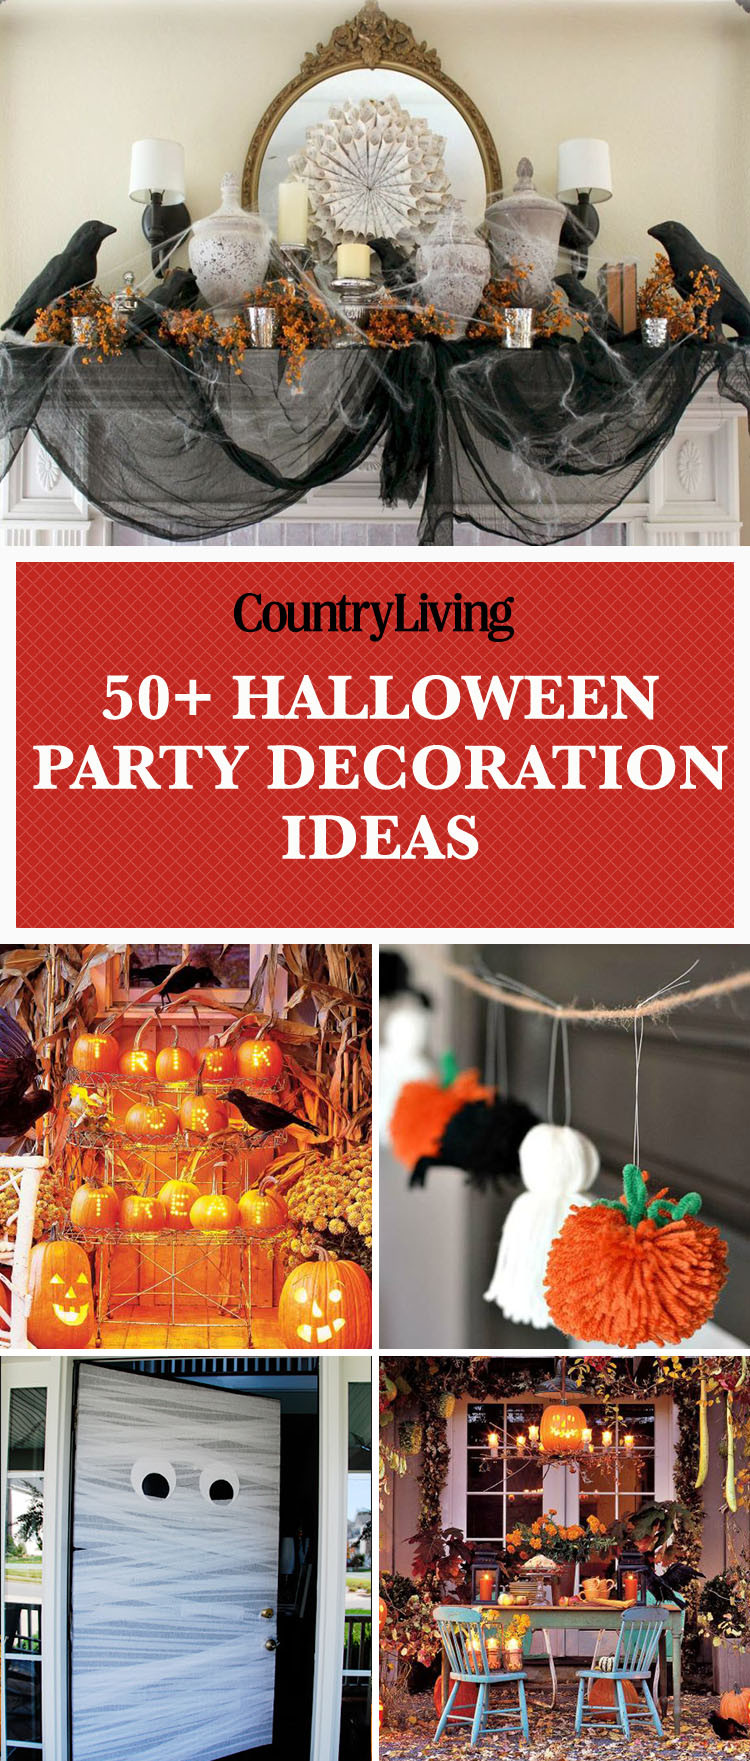 Fun Halloween Party Ideas
 56 Fun Halloween Party Decorating Ideas Spooky Halloween